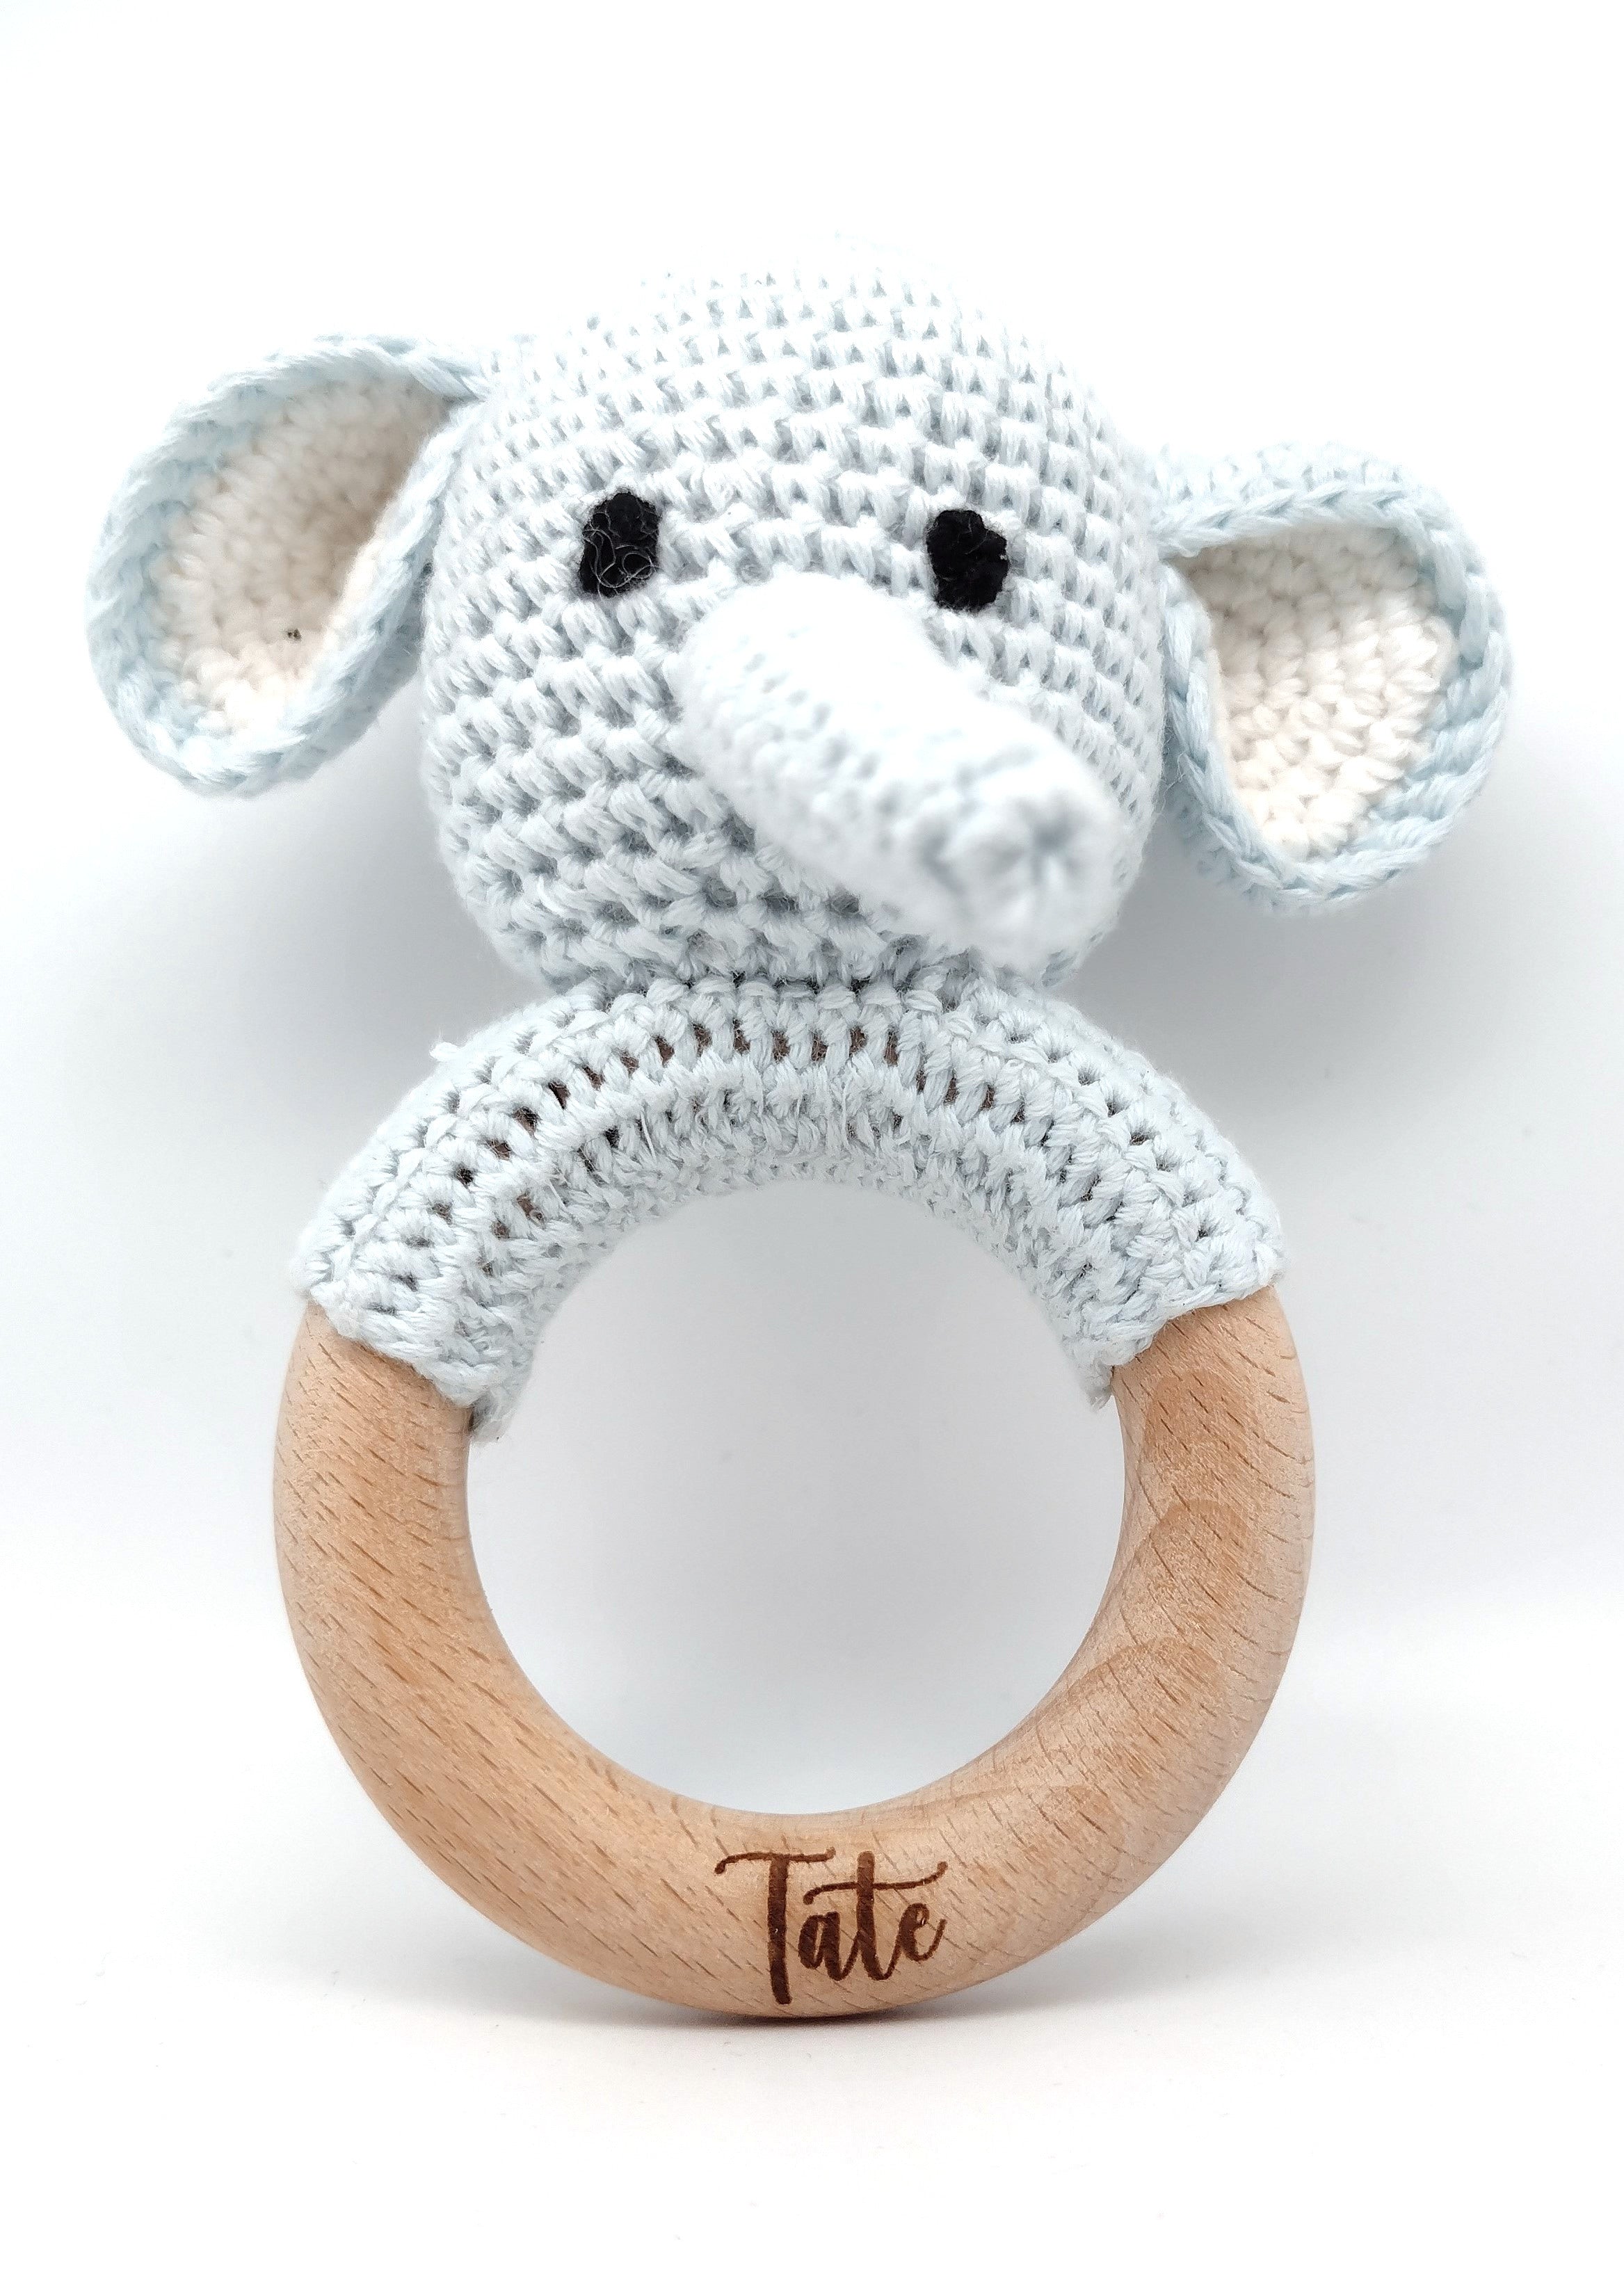 Handmade Baby Elephant Boy & Girl Teether / Rattle (Name or Name + DOB) Personalised